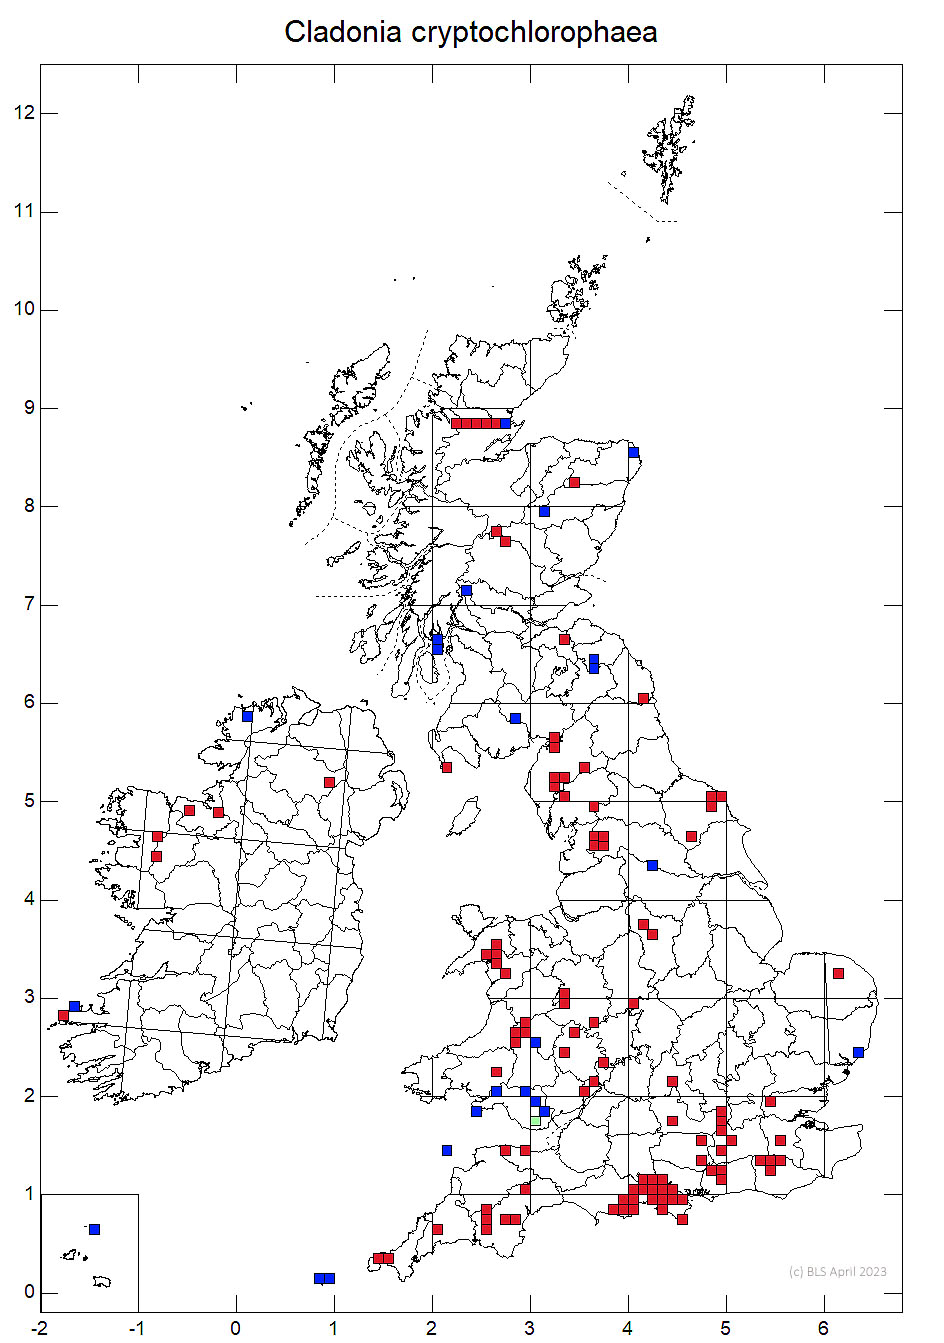 Cladonia cryptochlorophaea 10km sq distribution map